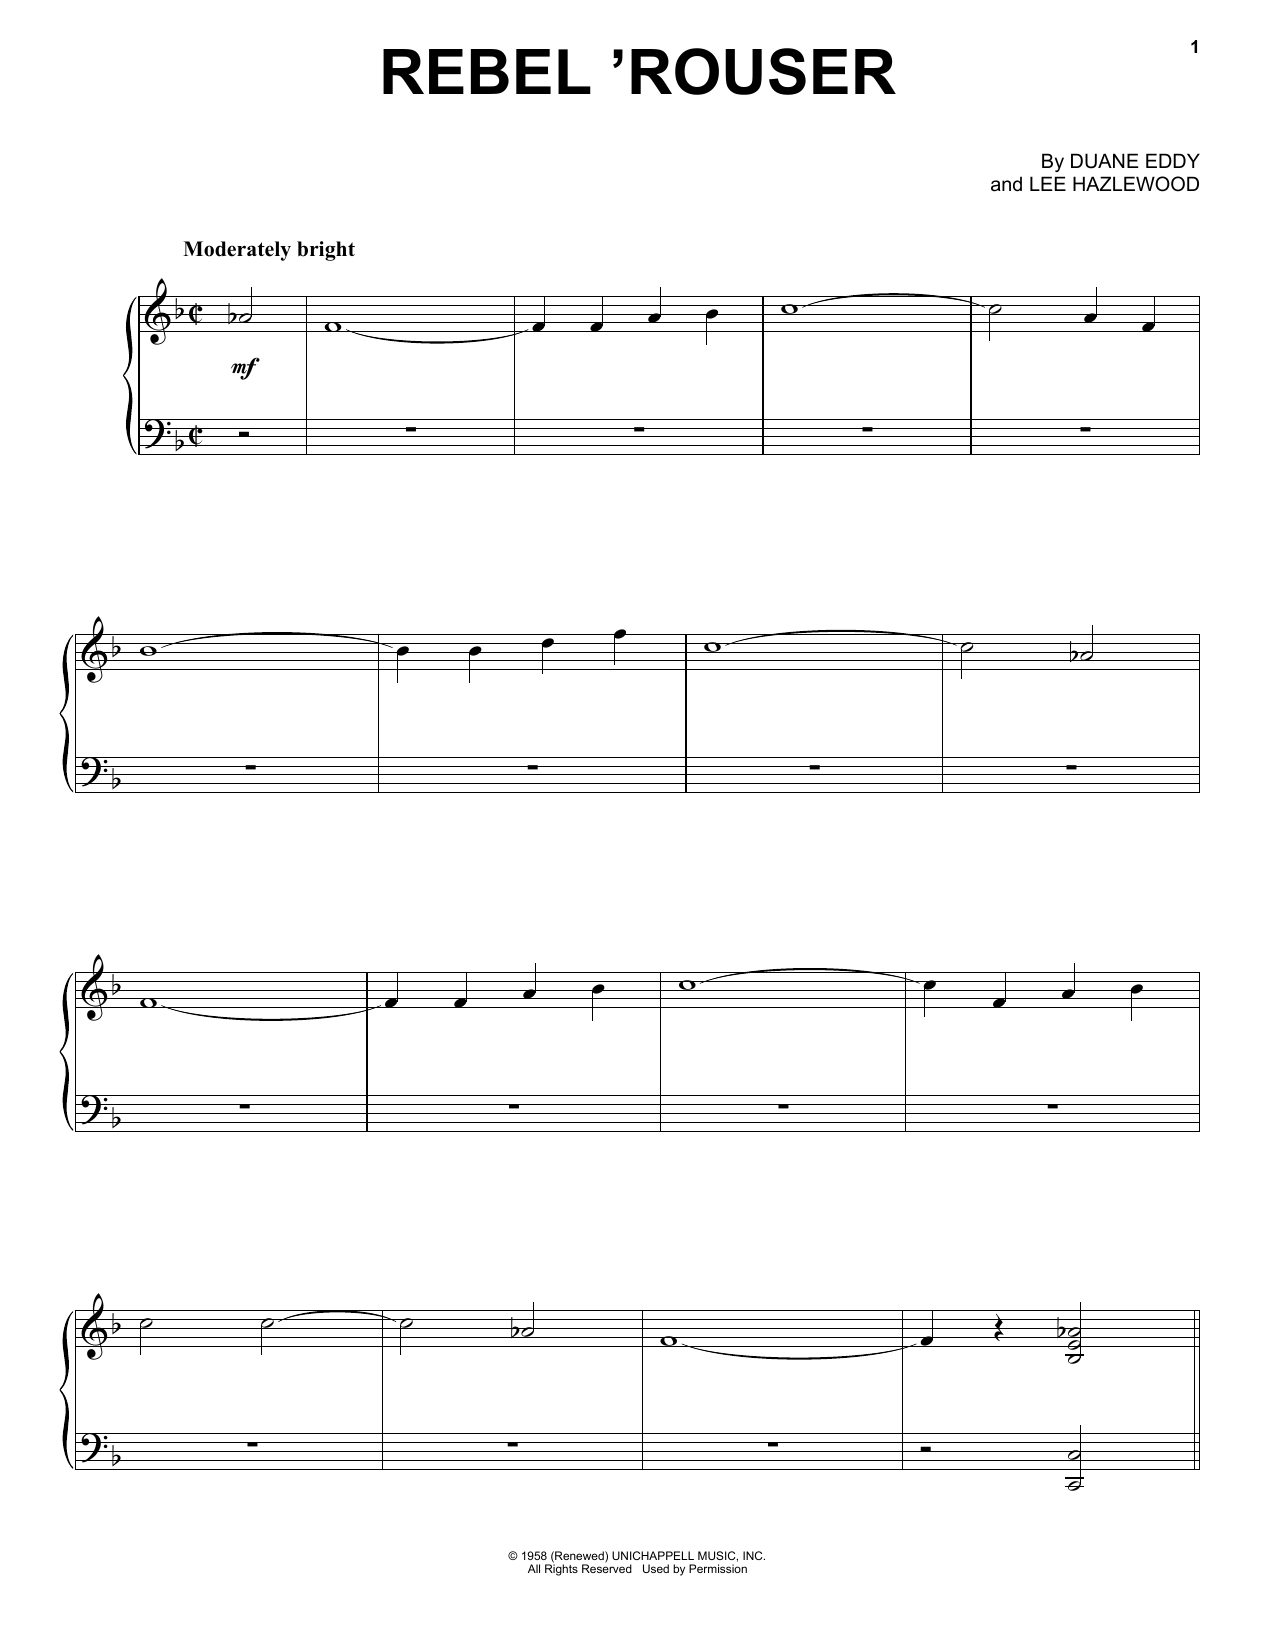 Duane Eddy Rebel 'Rouser Sheet Music Notes & Chords for Guitar Tab - Download or Print PDF